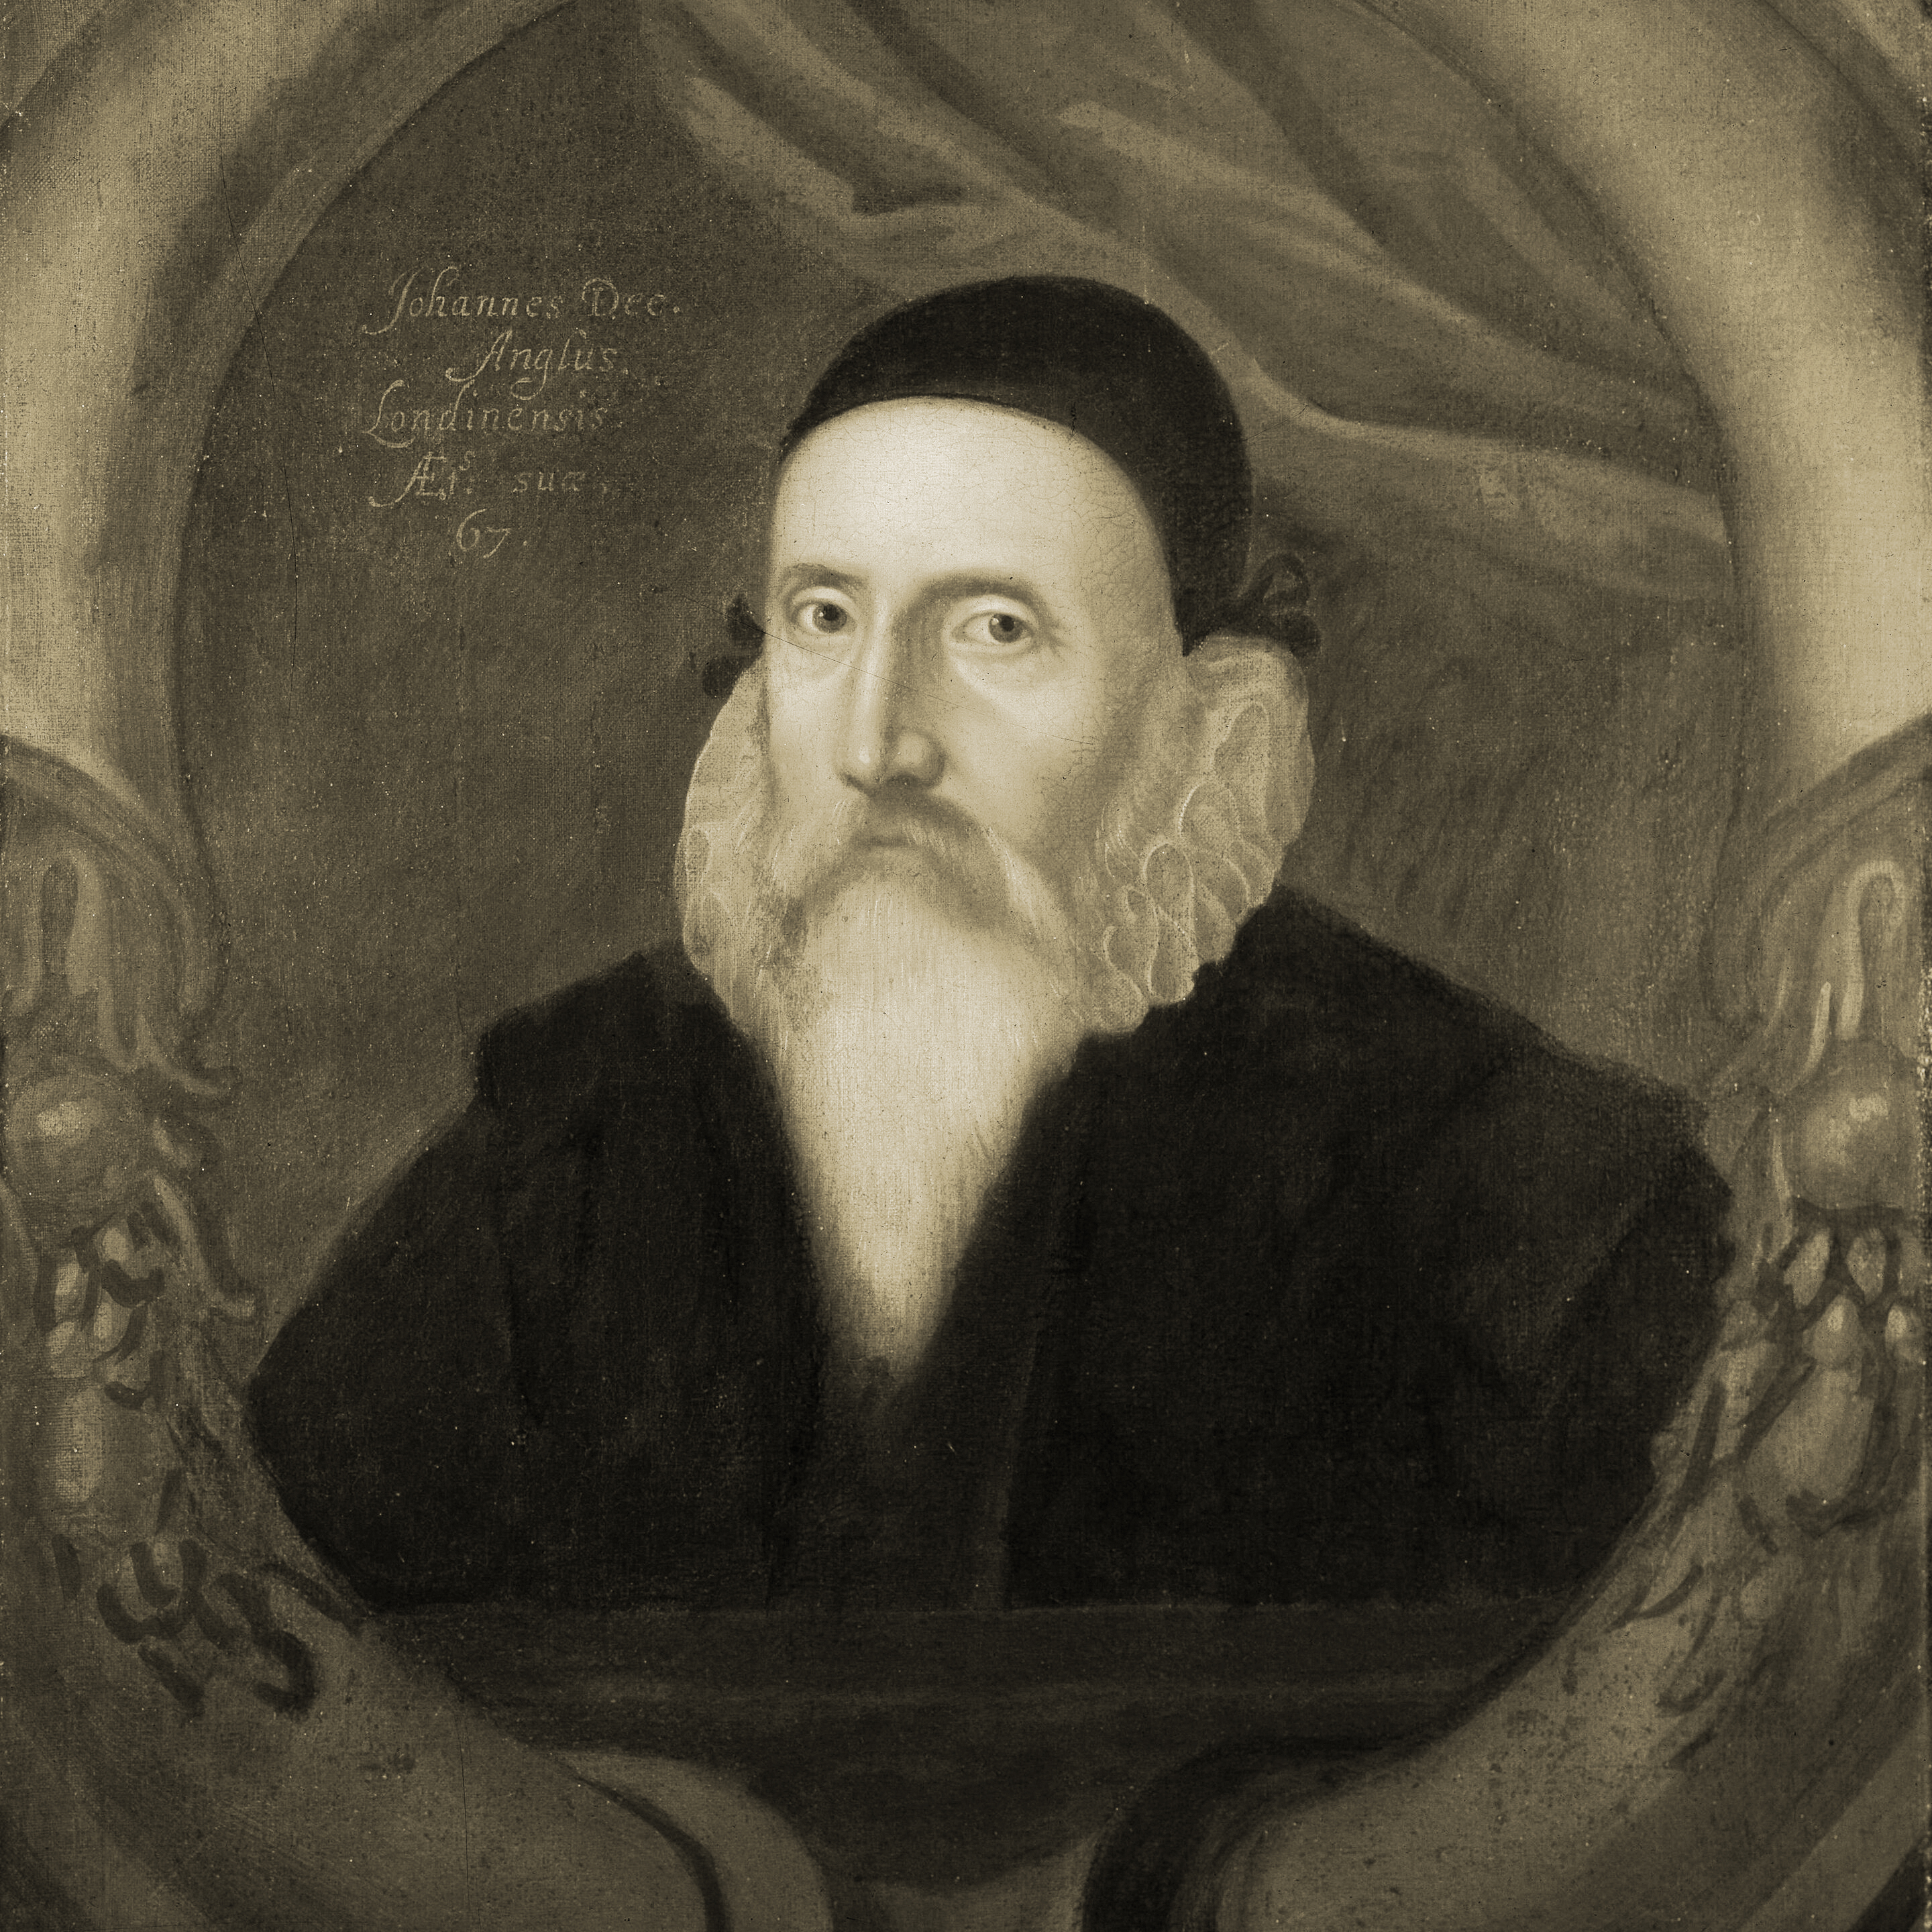 Dr. John Dee, English astronomer, teacher and astrologer. 